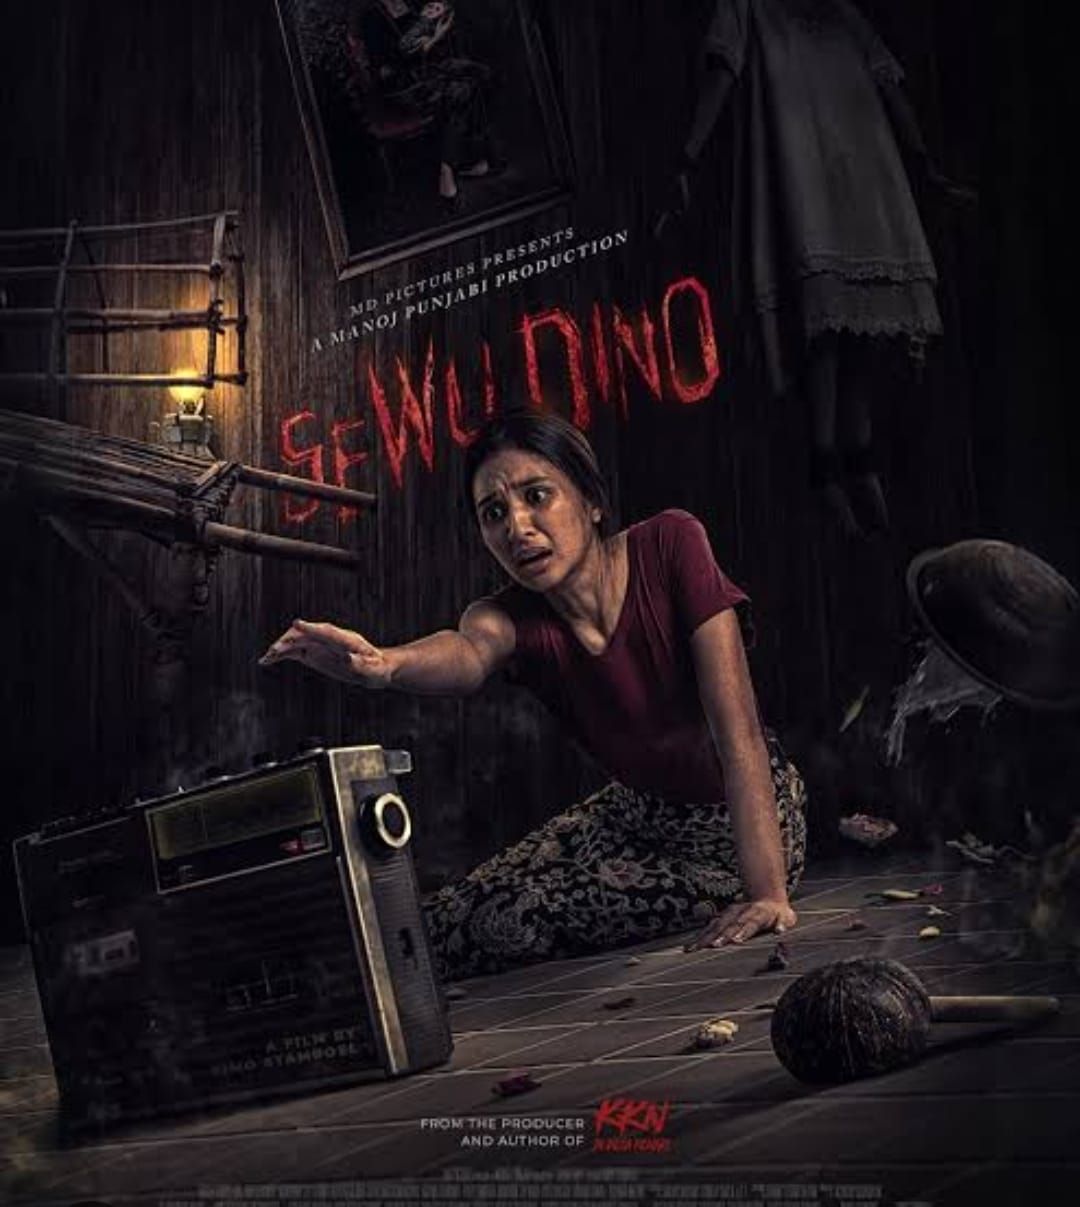 Poster film "Sewu Dino"